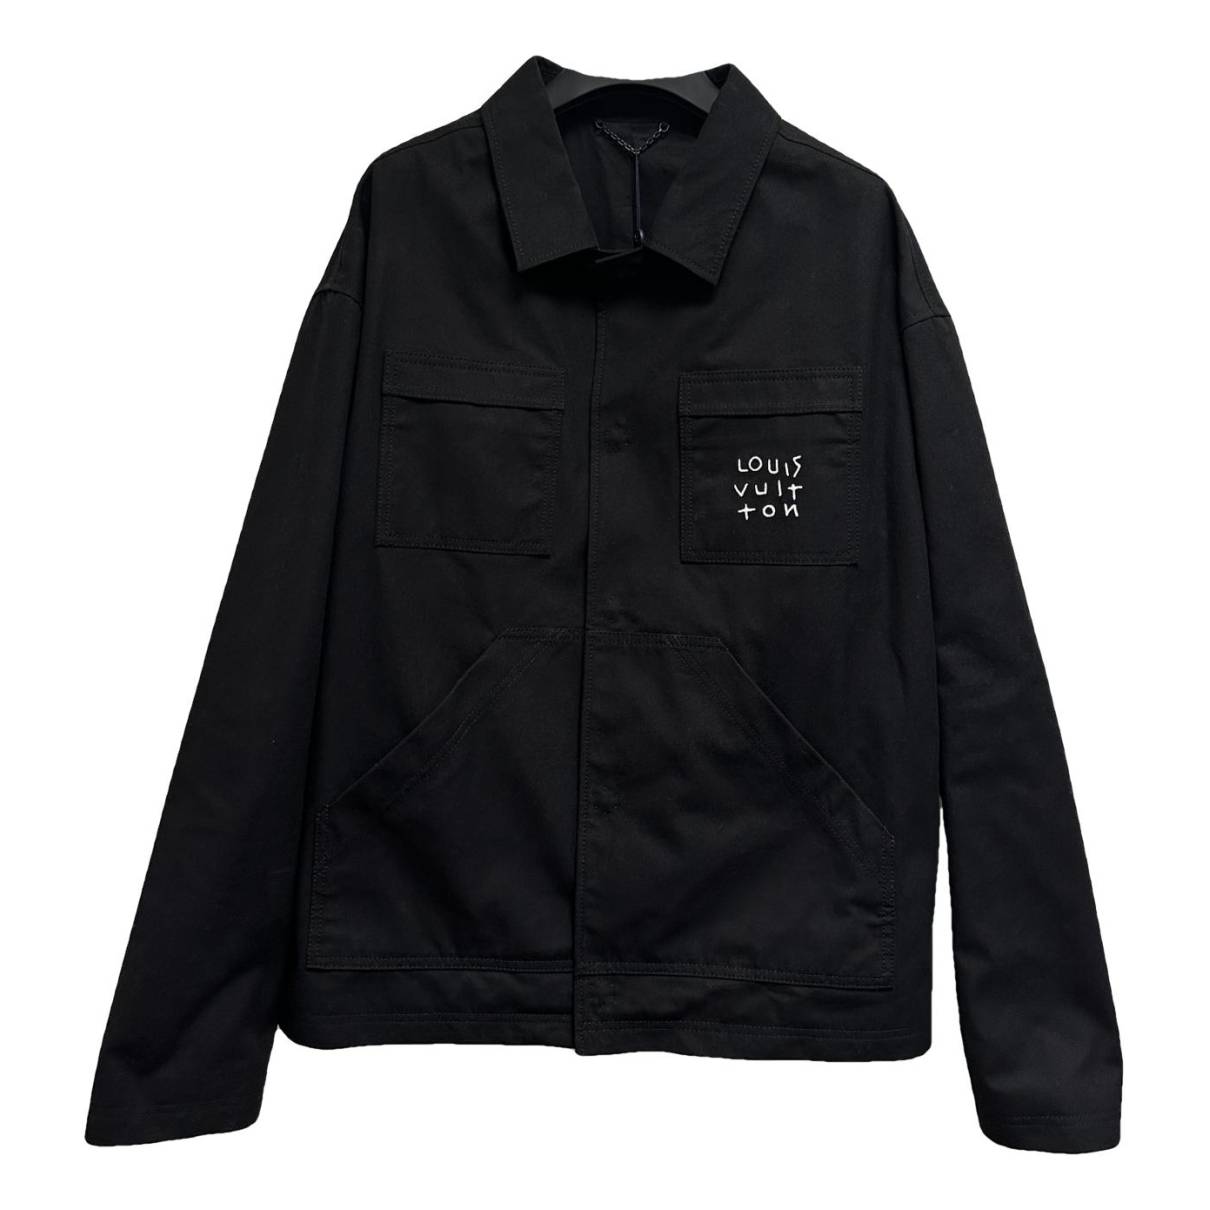 louis vuitton jacket black